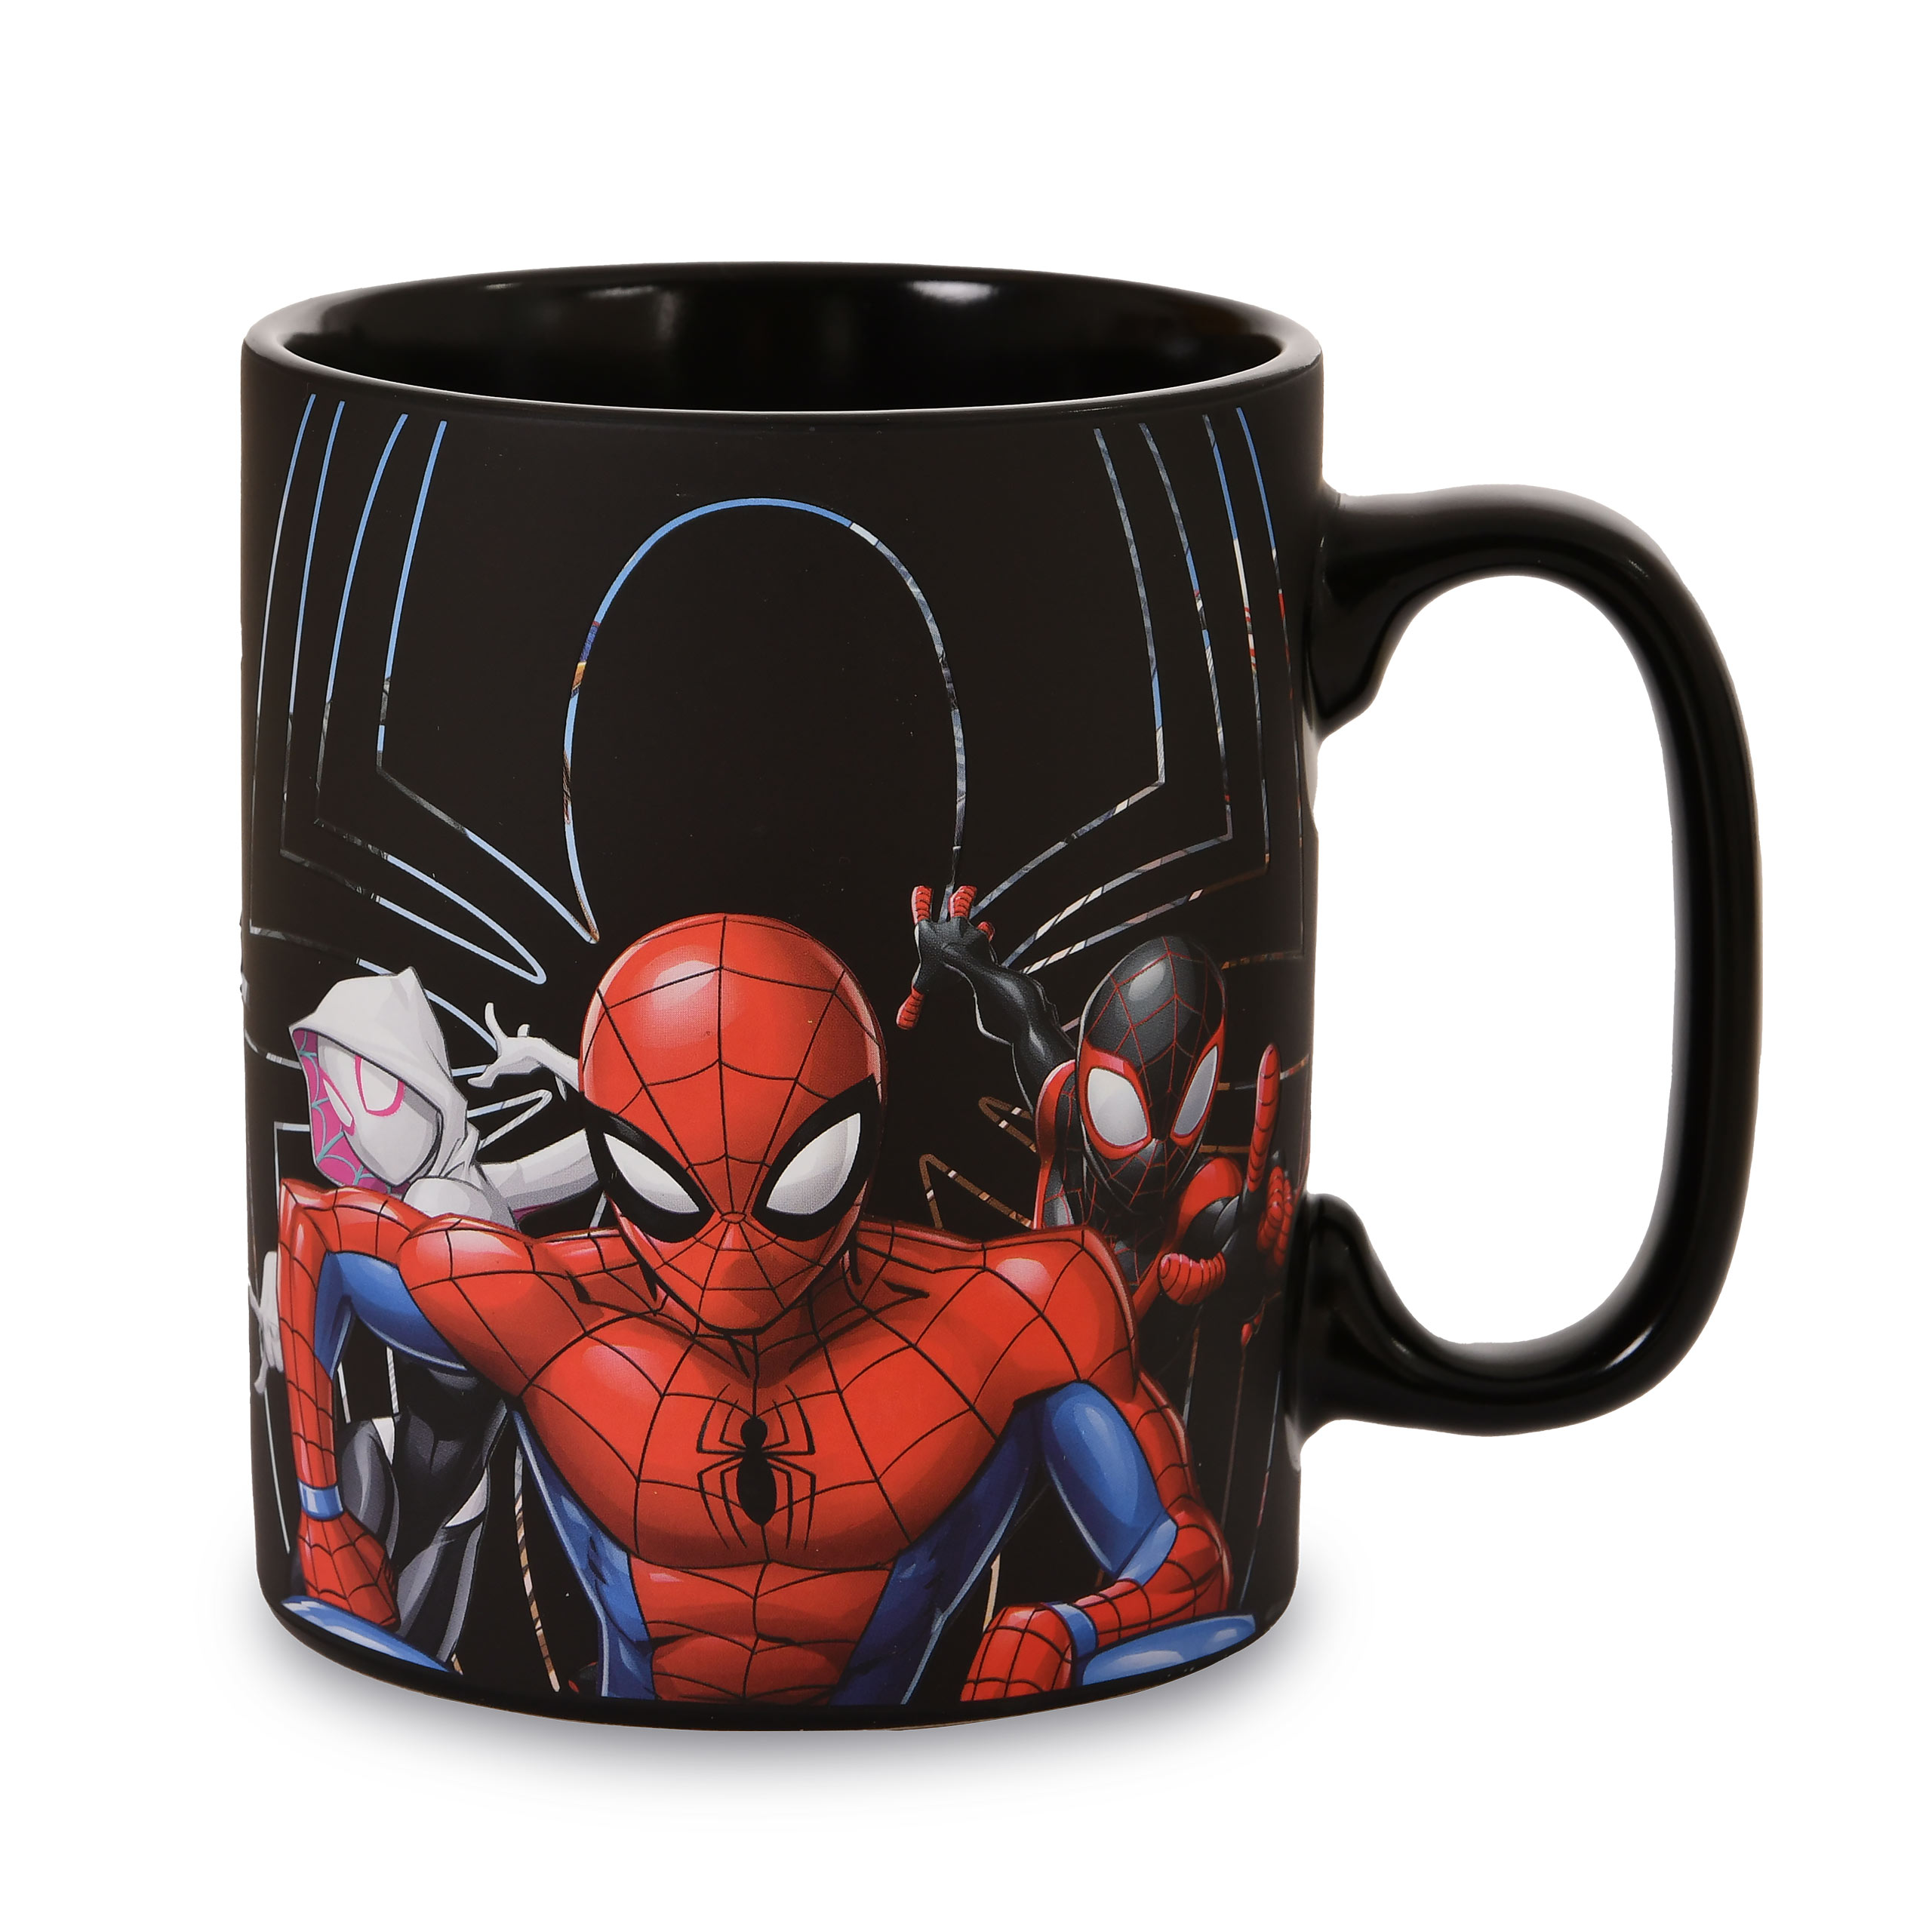 Spider-Man - Multiverse Thermo Effect Mug